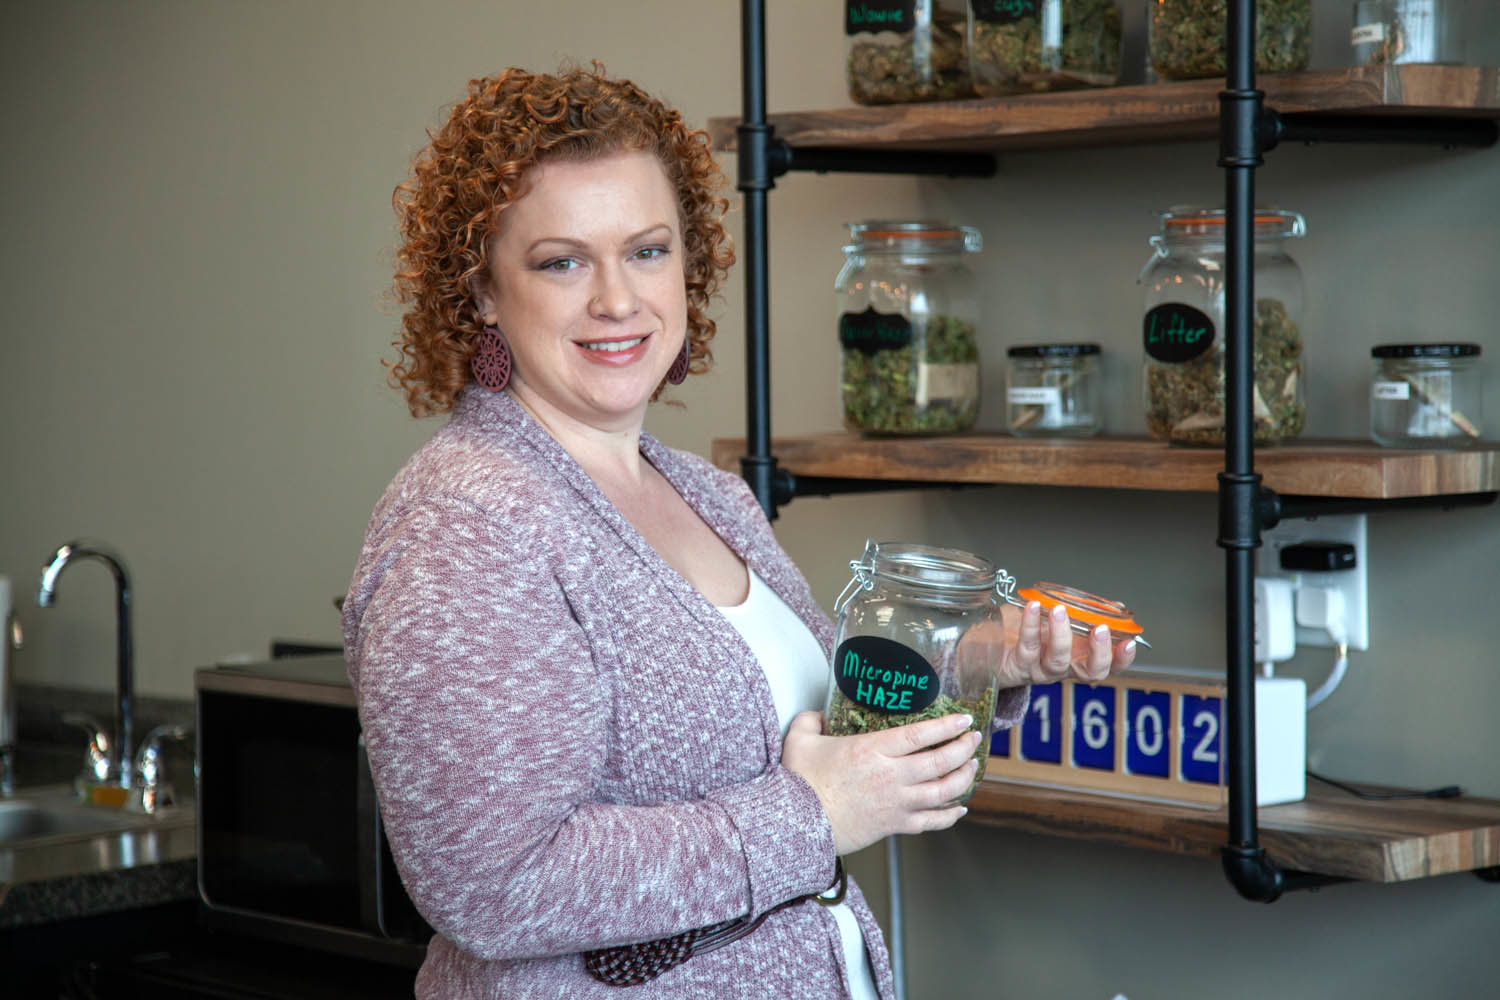 Jamie Tillman is a hopeful medical marijuana entrepreneur through Canna Bliss.